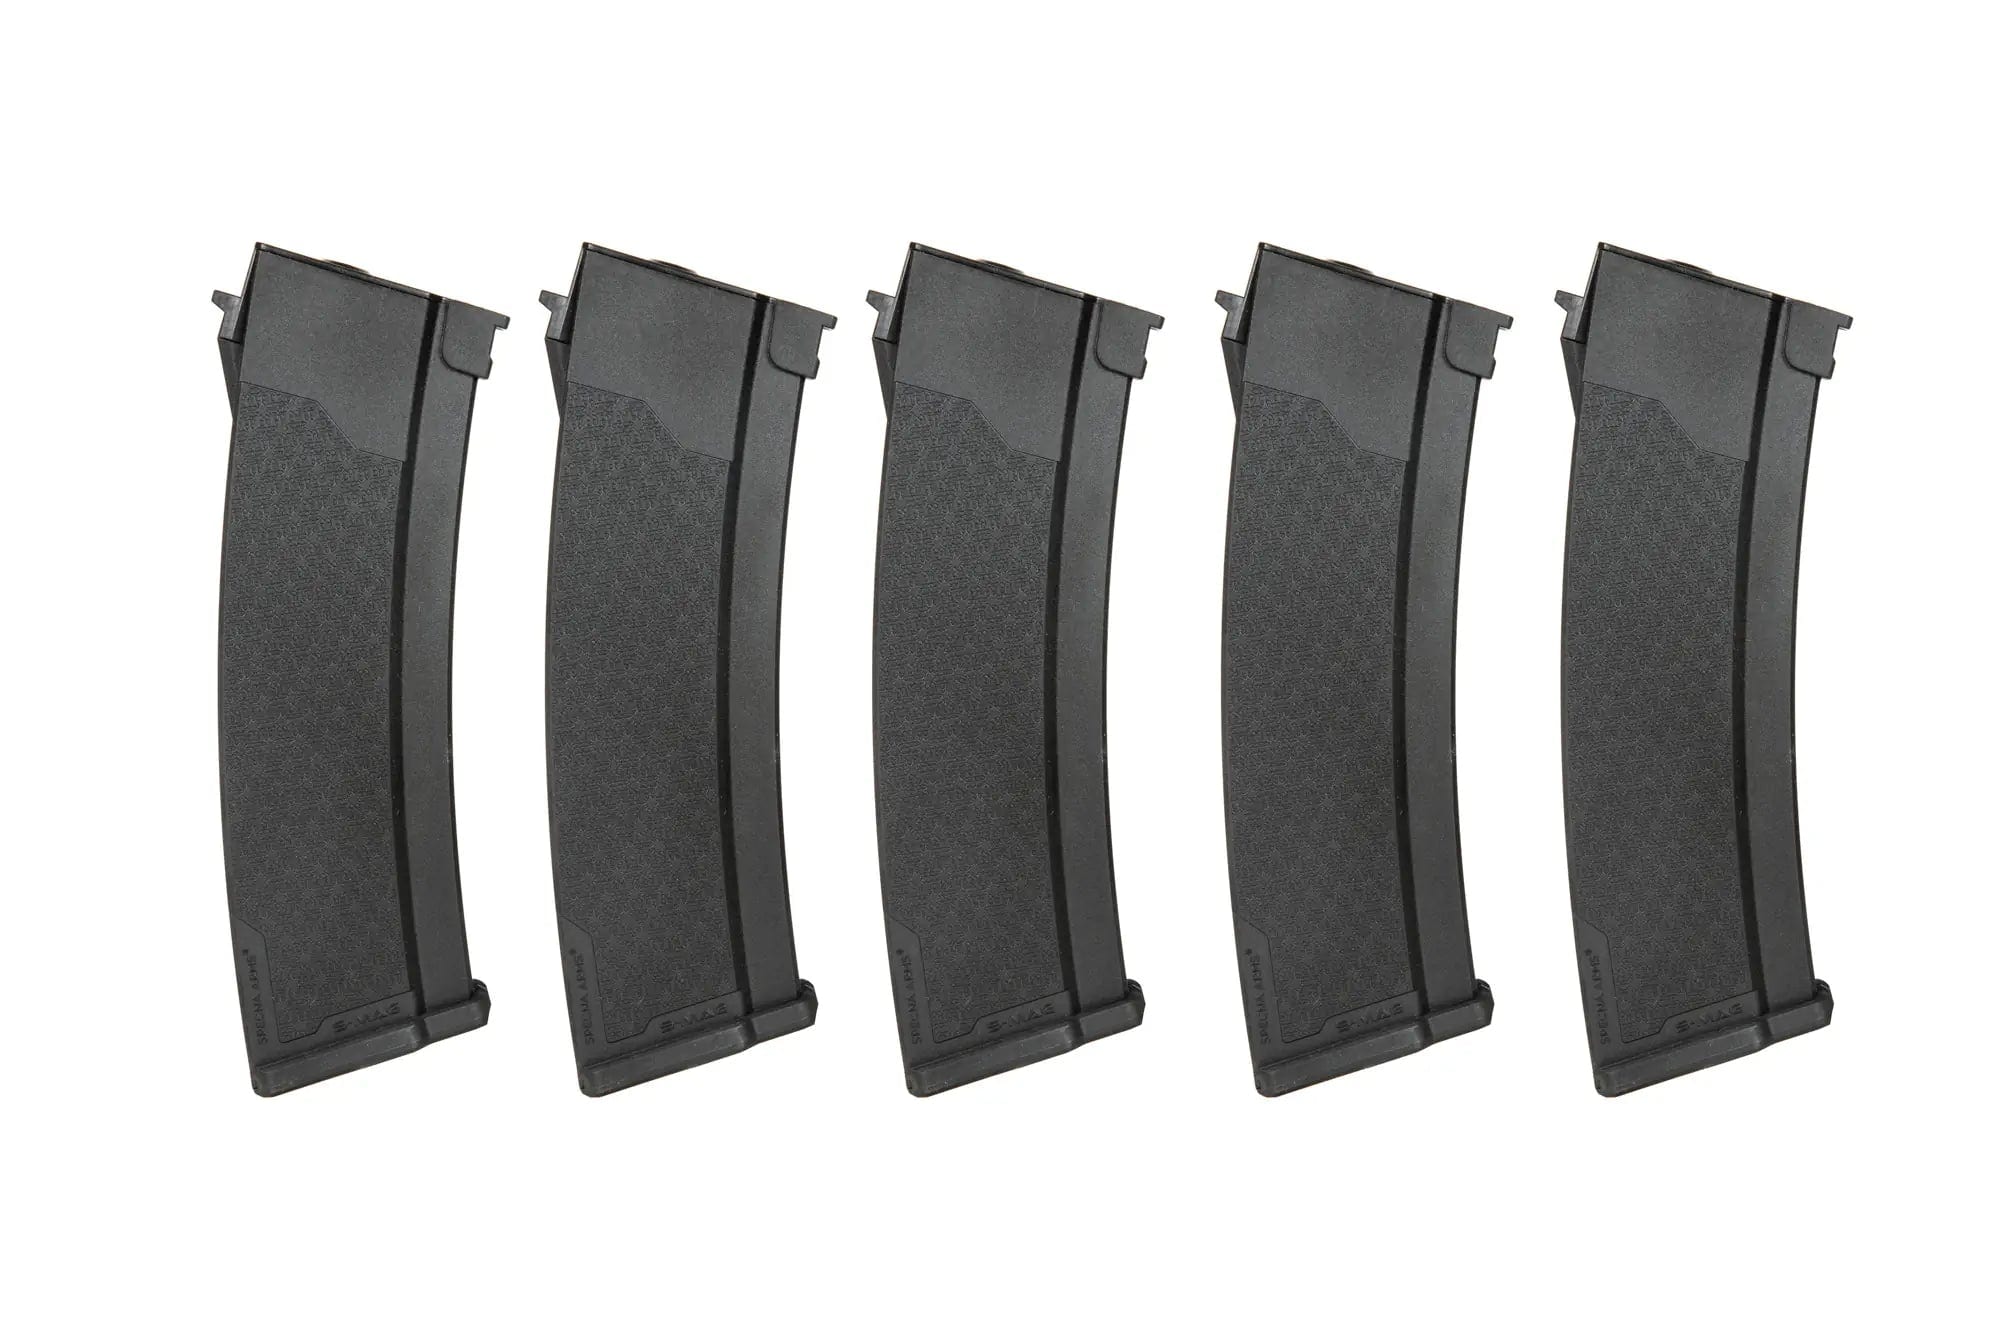 Set of 5 Mid-Cap S-Mag Magazines for AK - Black